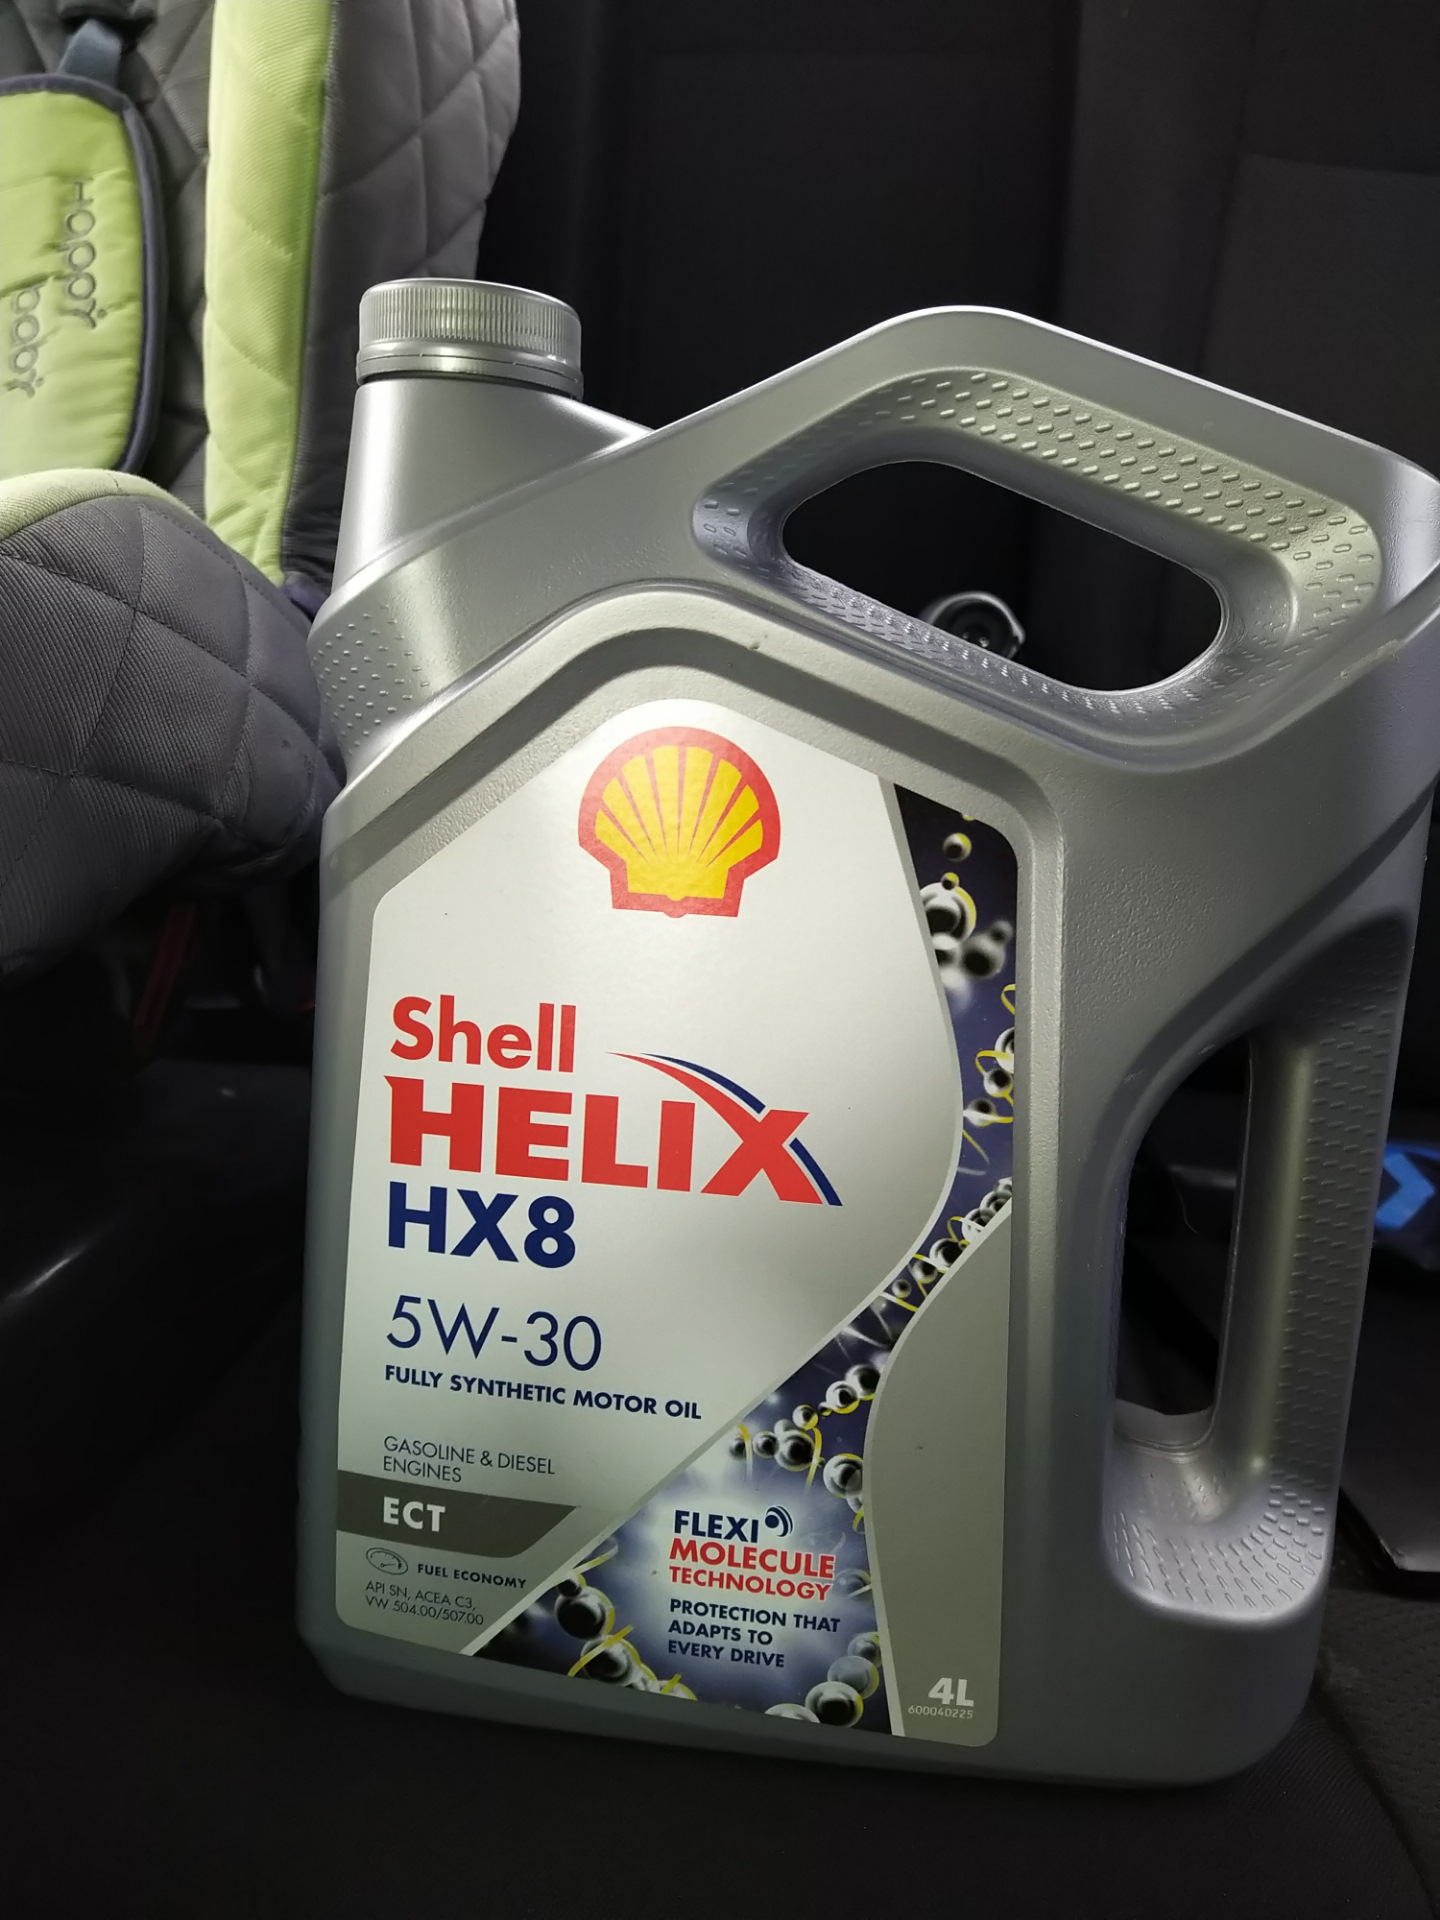 Shell hx8 5w30 купить. Shell hx8 5w30 ect. Hx8 ect 5w30. Shell Helix hx8 5w30 для Киа. Helix hx8 ect 5w-30.